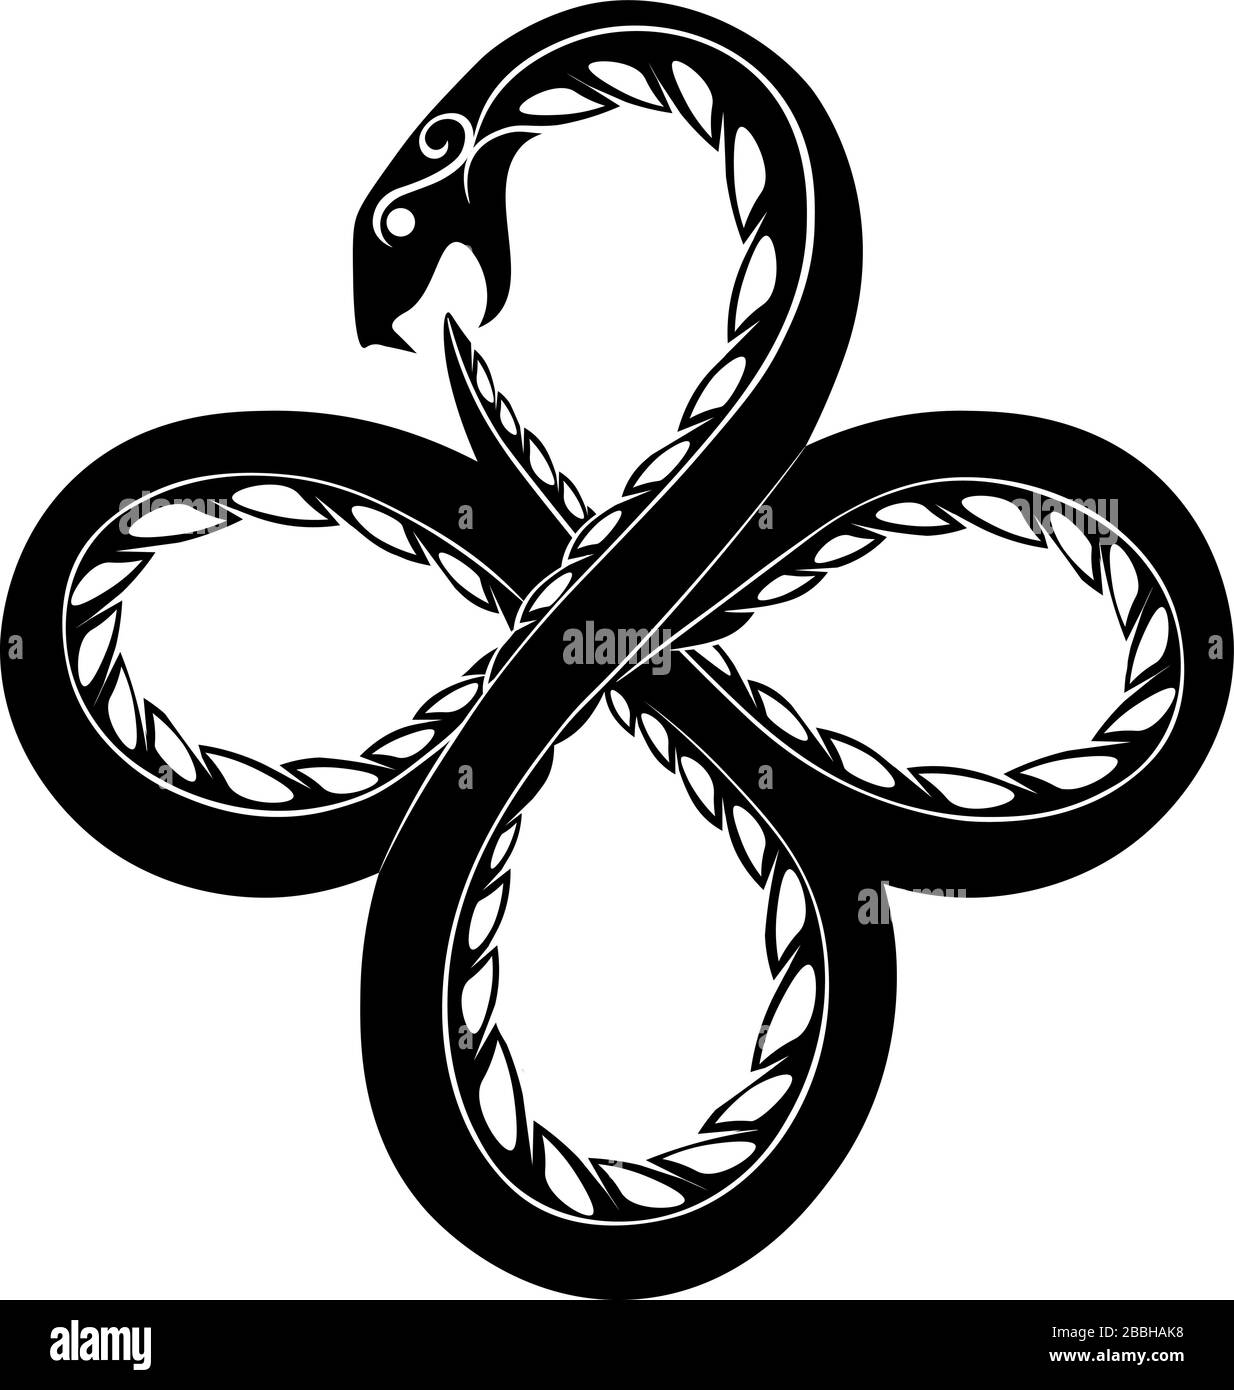 Black tatoo or print illustration of occult symbol ouroboros serpent Stock Vector